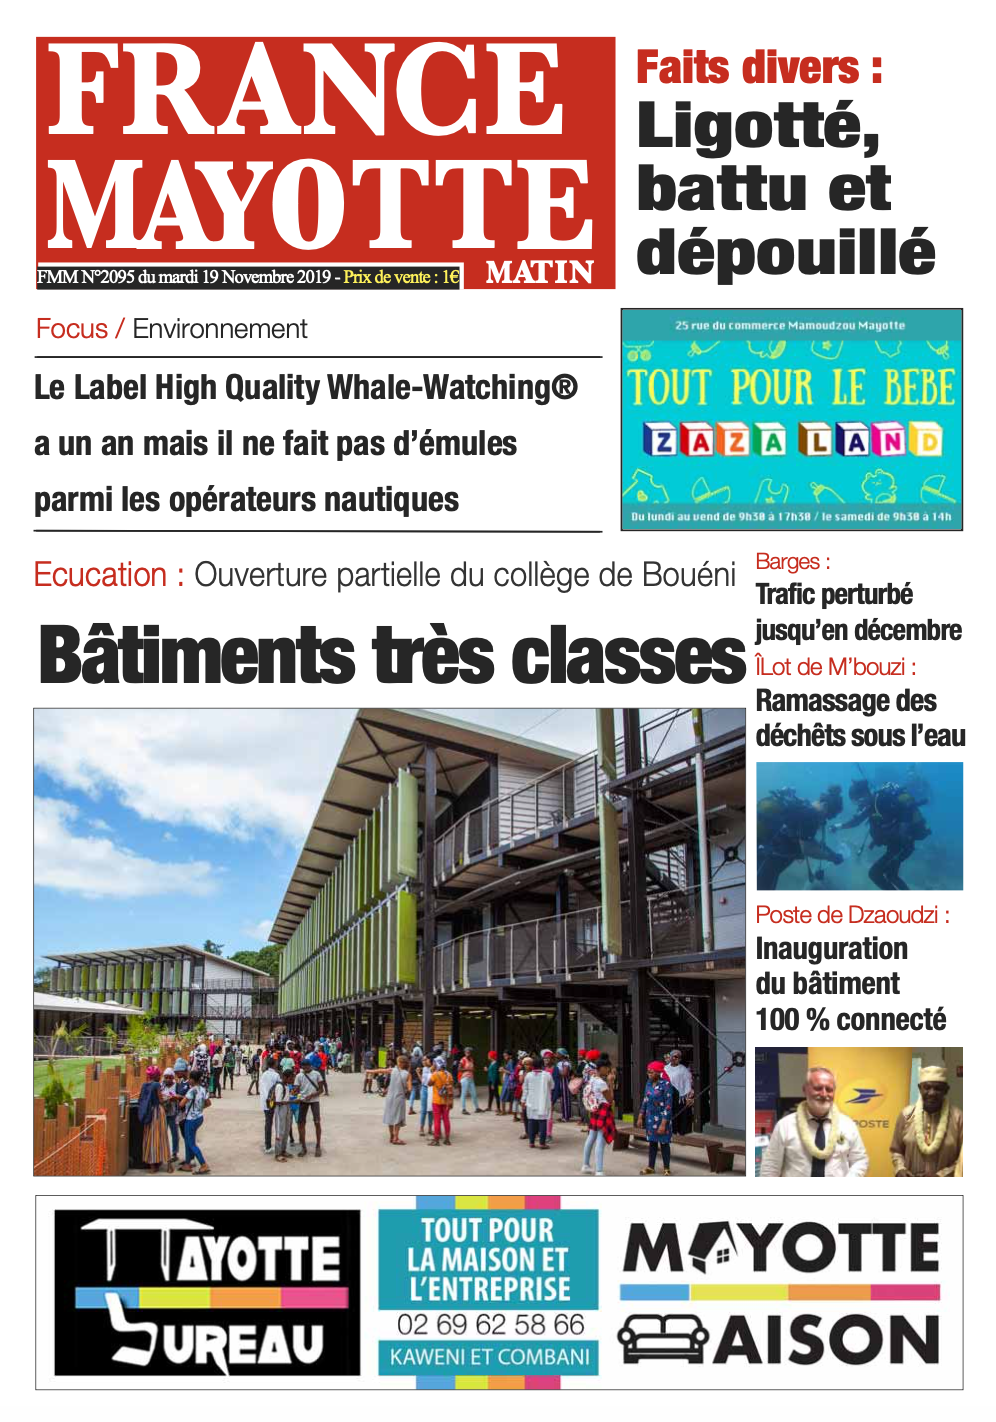 France Mayotte Mardi 19 novembre 2019